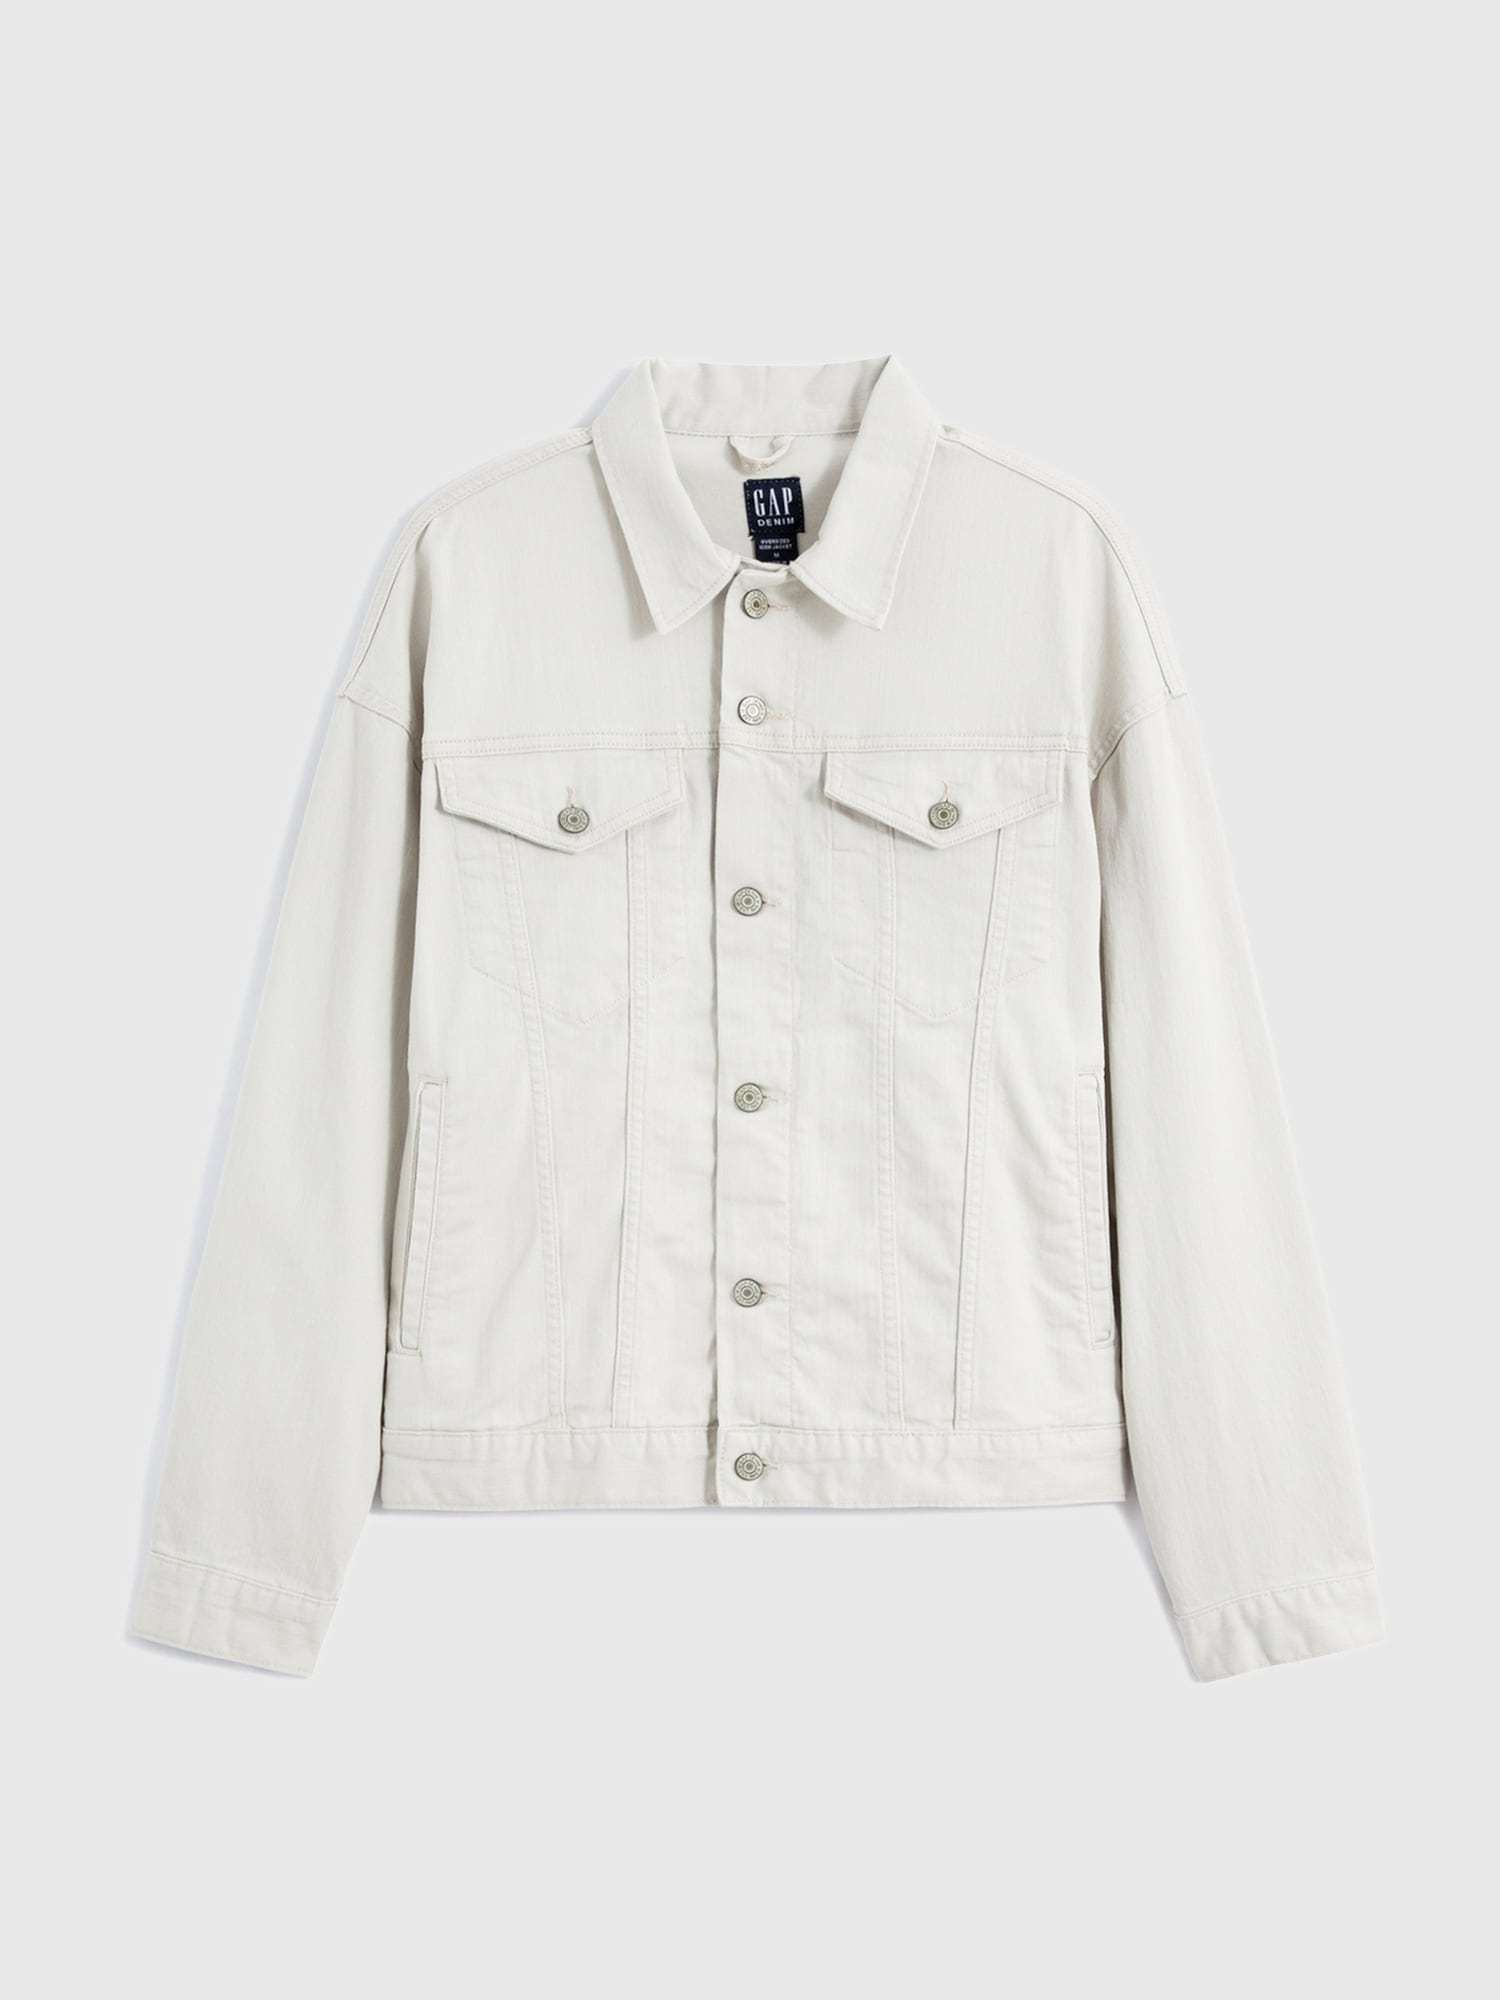 cowboy jacket XL ホワイト 白 white - speedlb.com